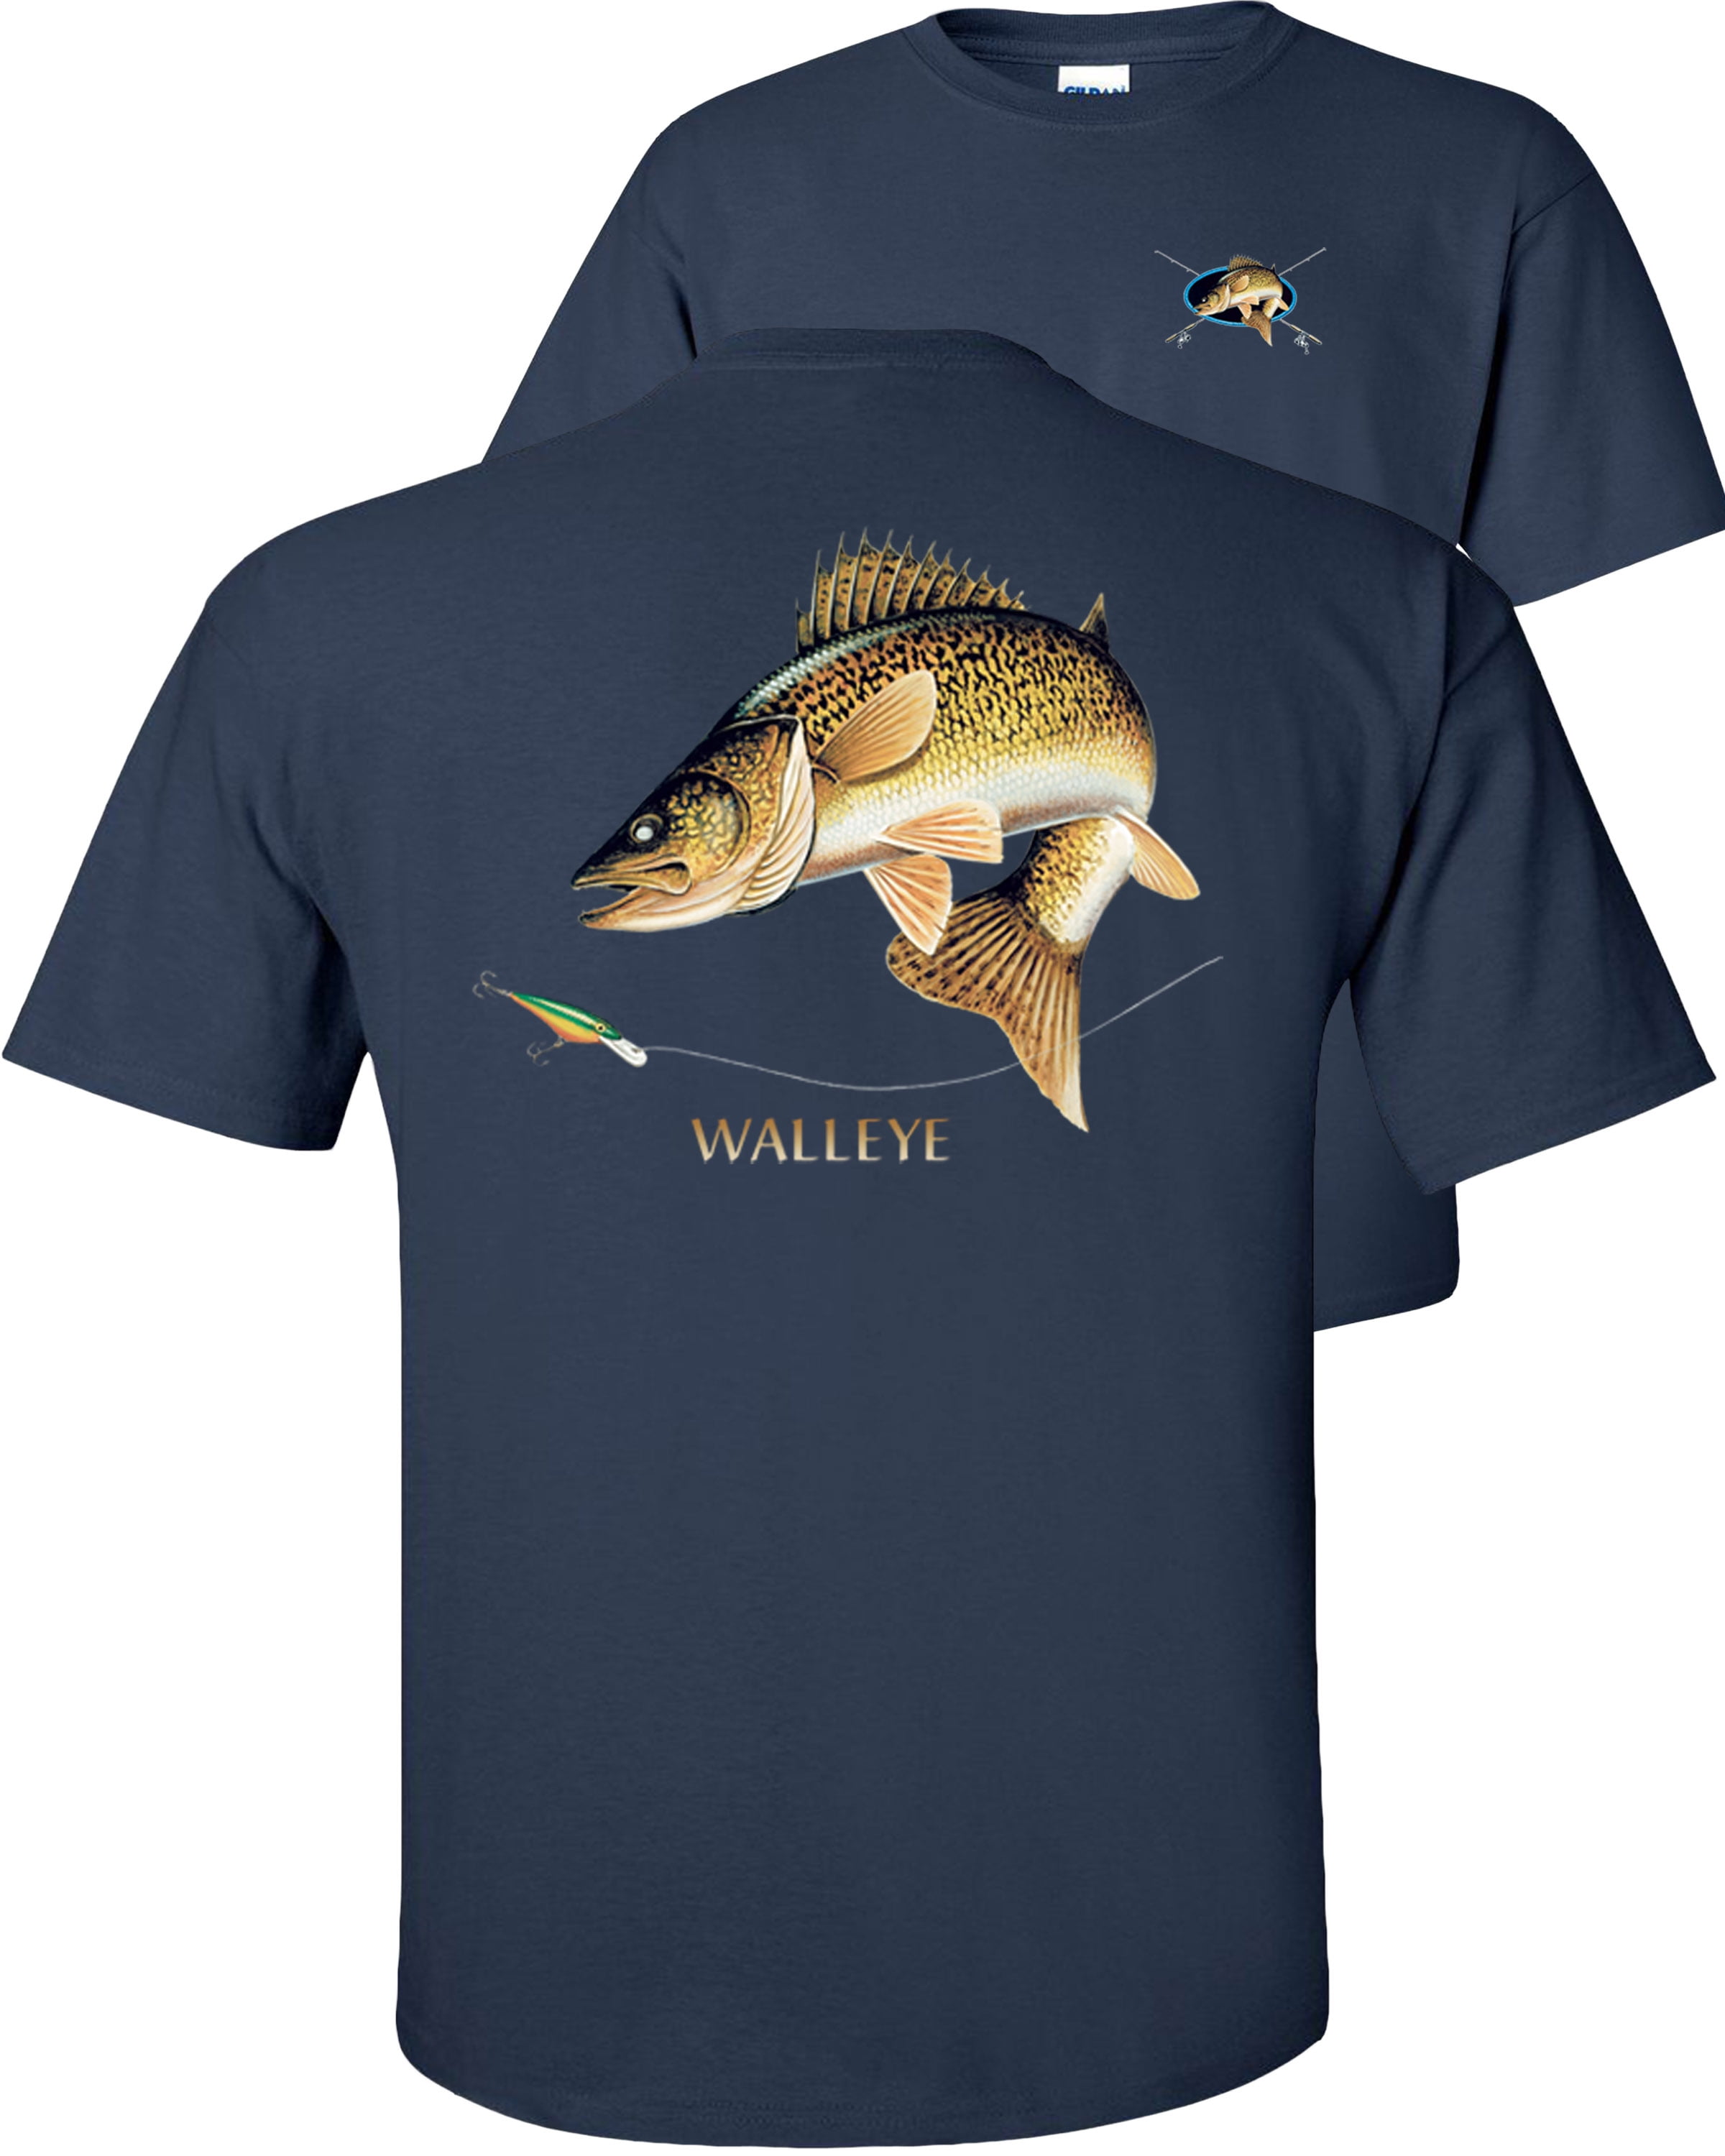 Fair Game Walleye Fishing T-Shirt, combination profile, Fishing Graphic  Tee-Black-3x 